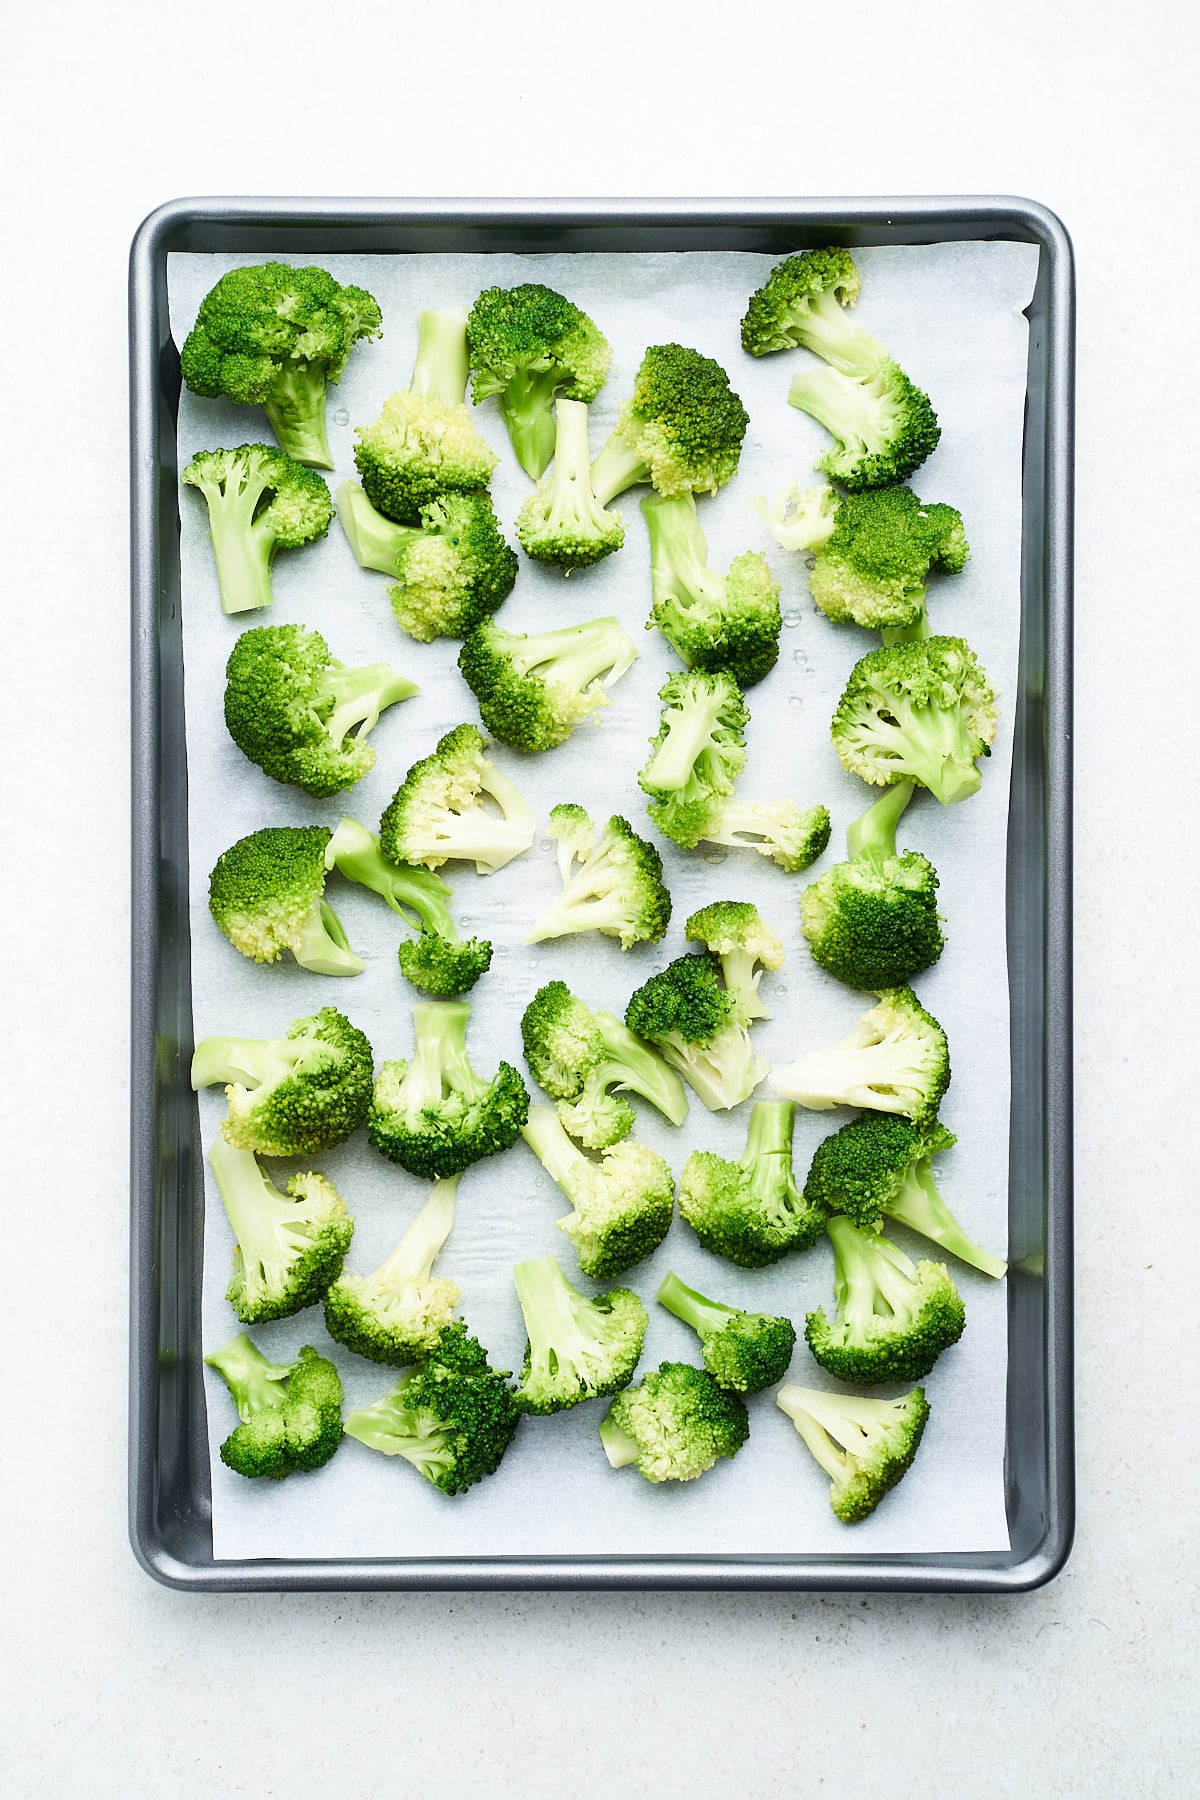 Frozen broccoli on a baking tray.